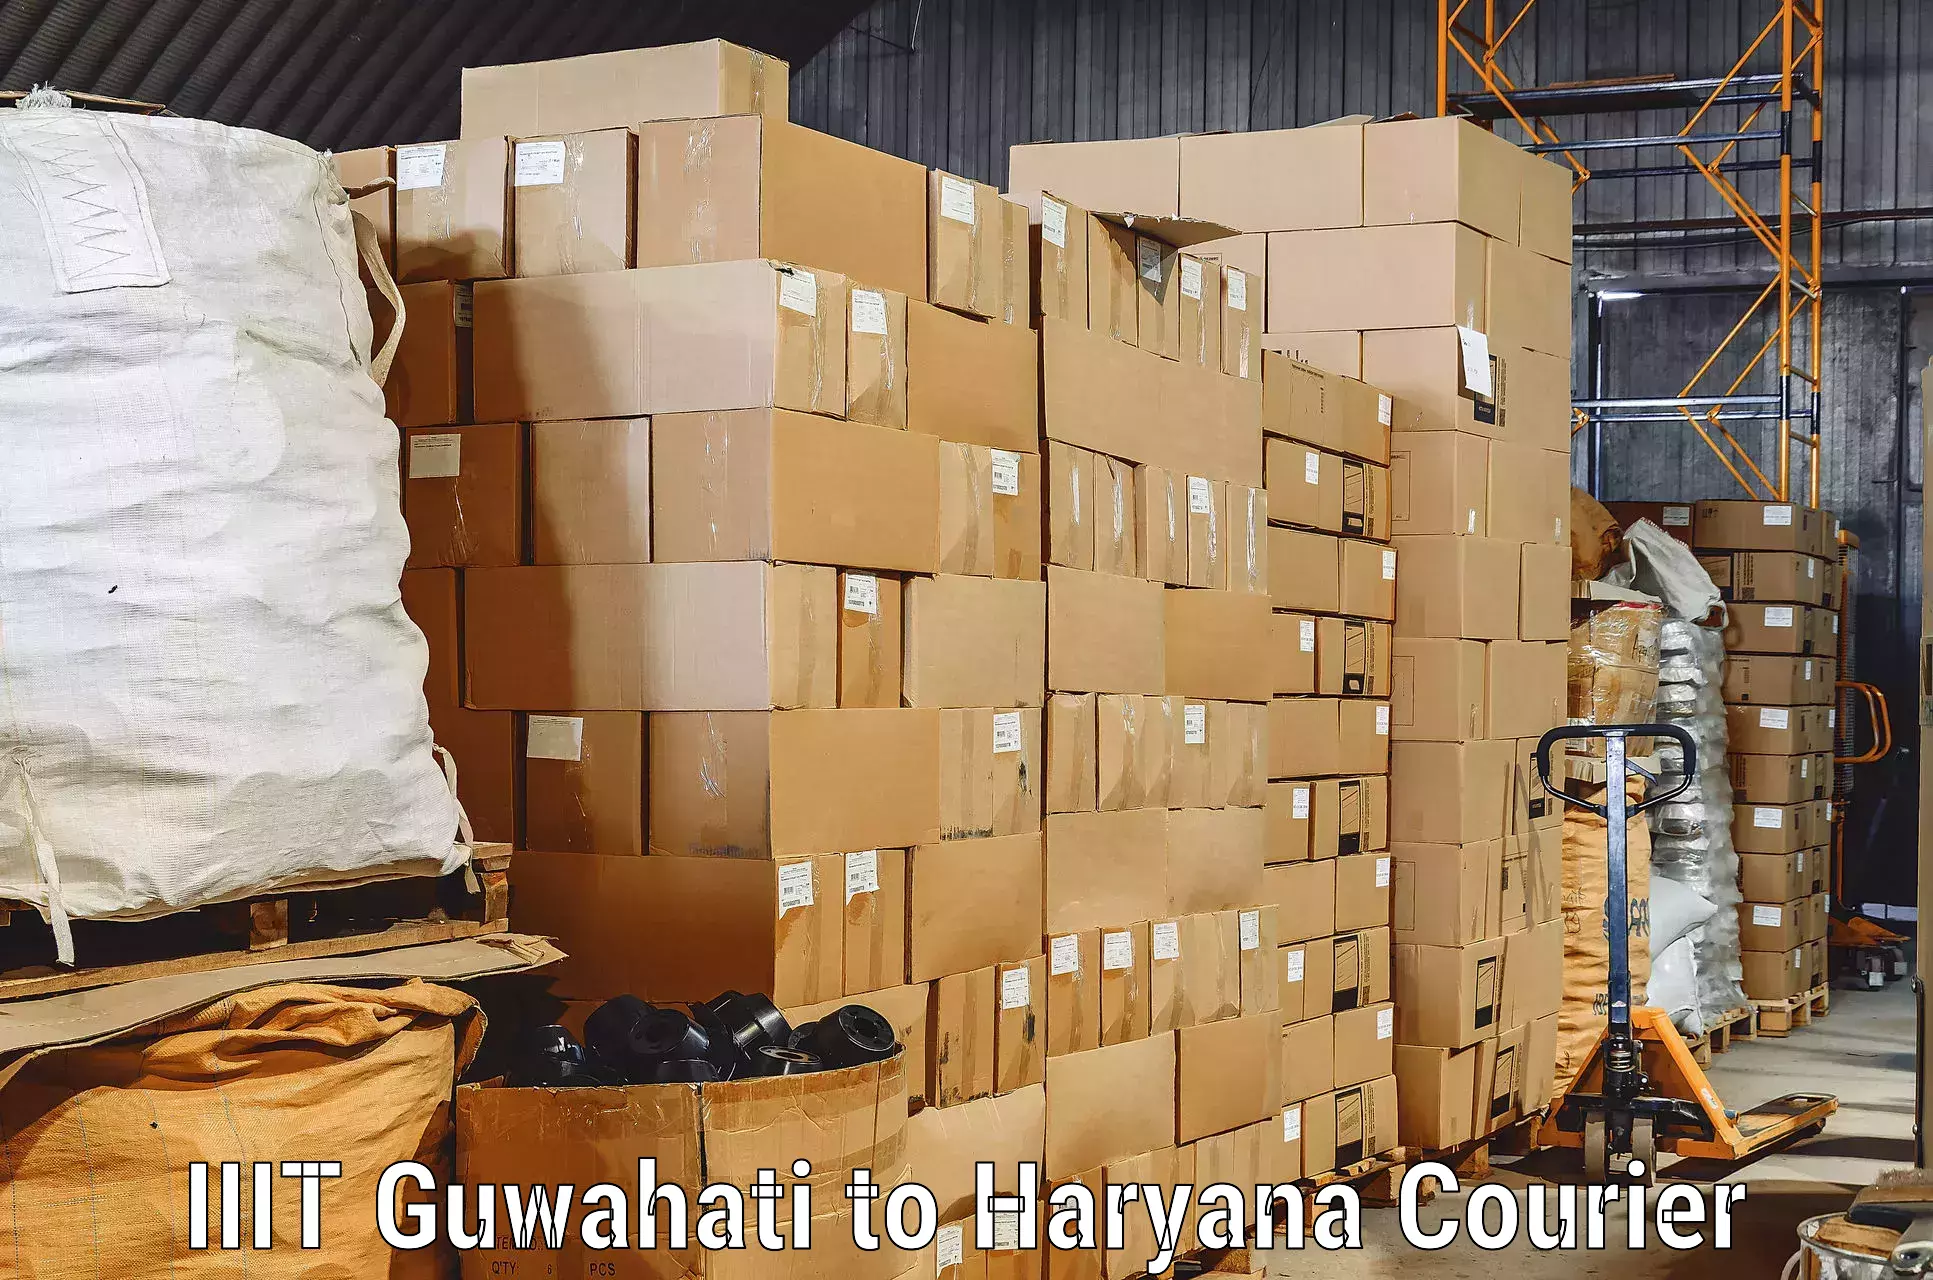 Reliable goods transport IIIT Guwahati to Gurgaon